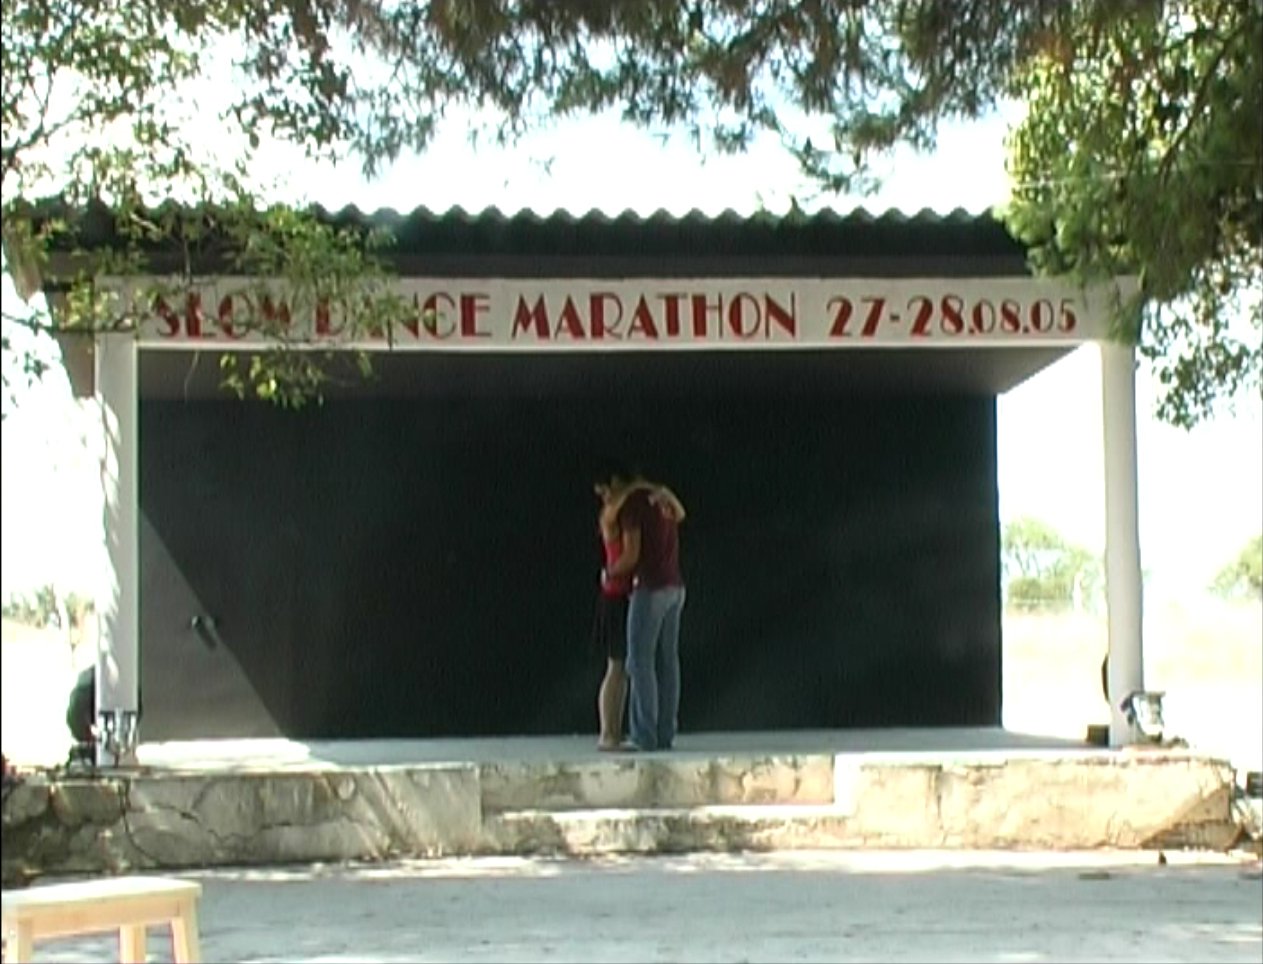 Christodoulos Panayiotou, Slow Dance Marathon, still, video, 4 min. 19 sec., 2005